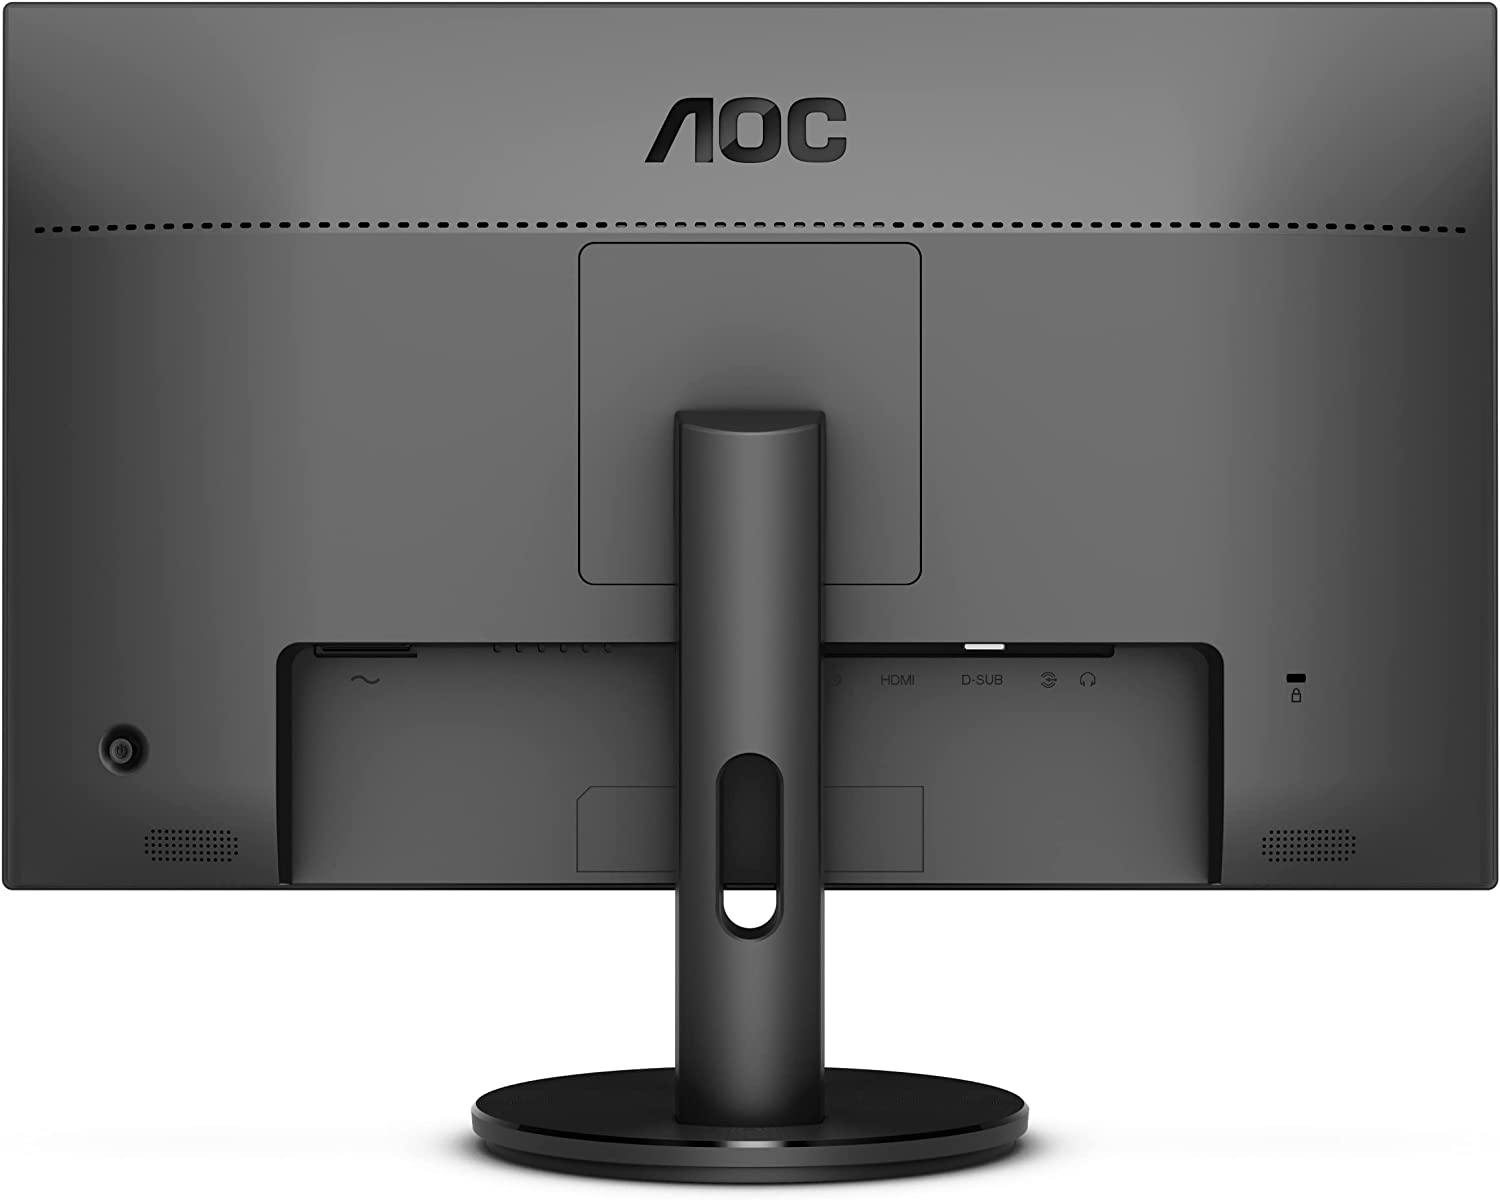 AOC G2490VX-B 23.8" 1920 x 1080 144Hz Gaming Monitor - Certified Refurbished